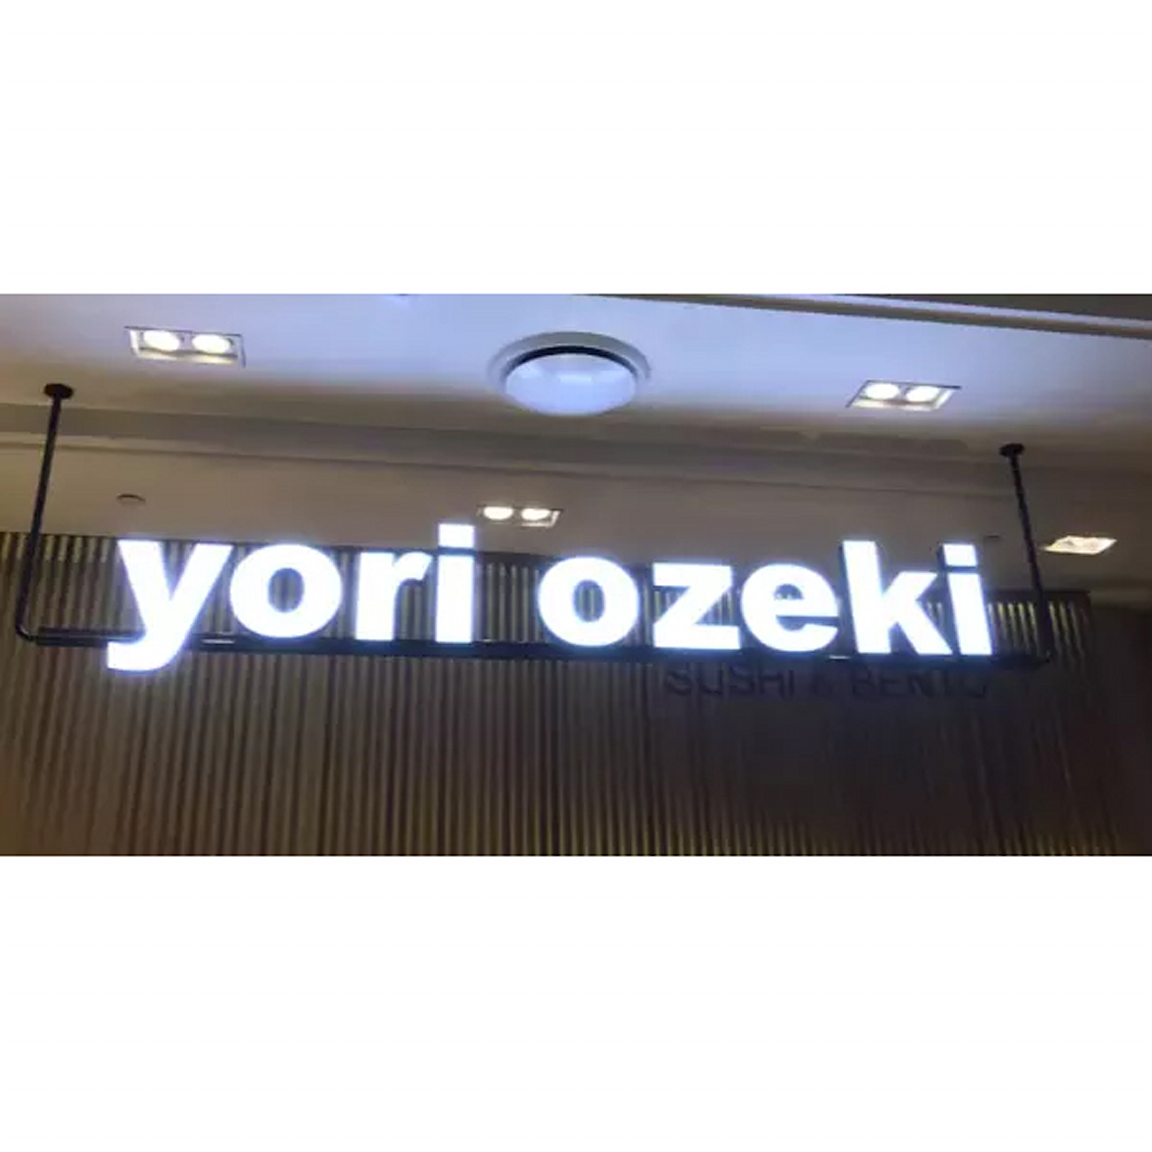 yori-ozeki-logo